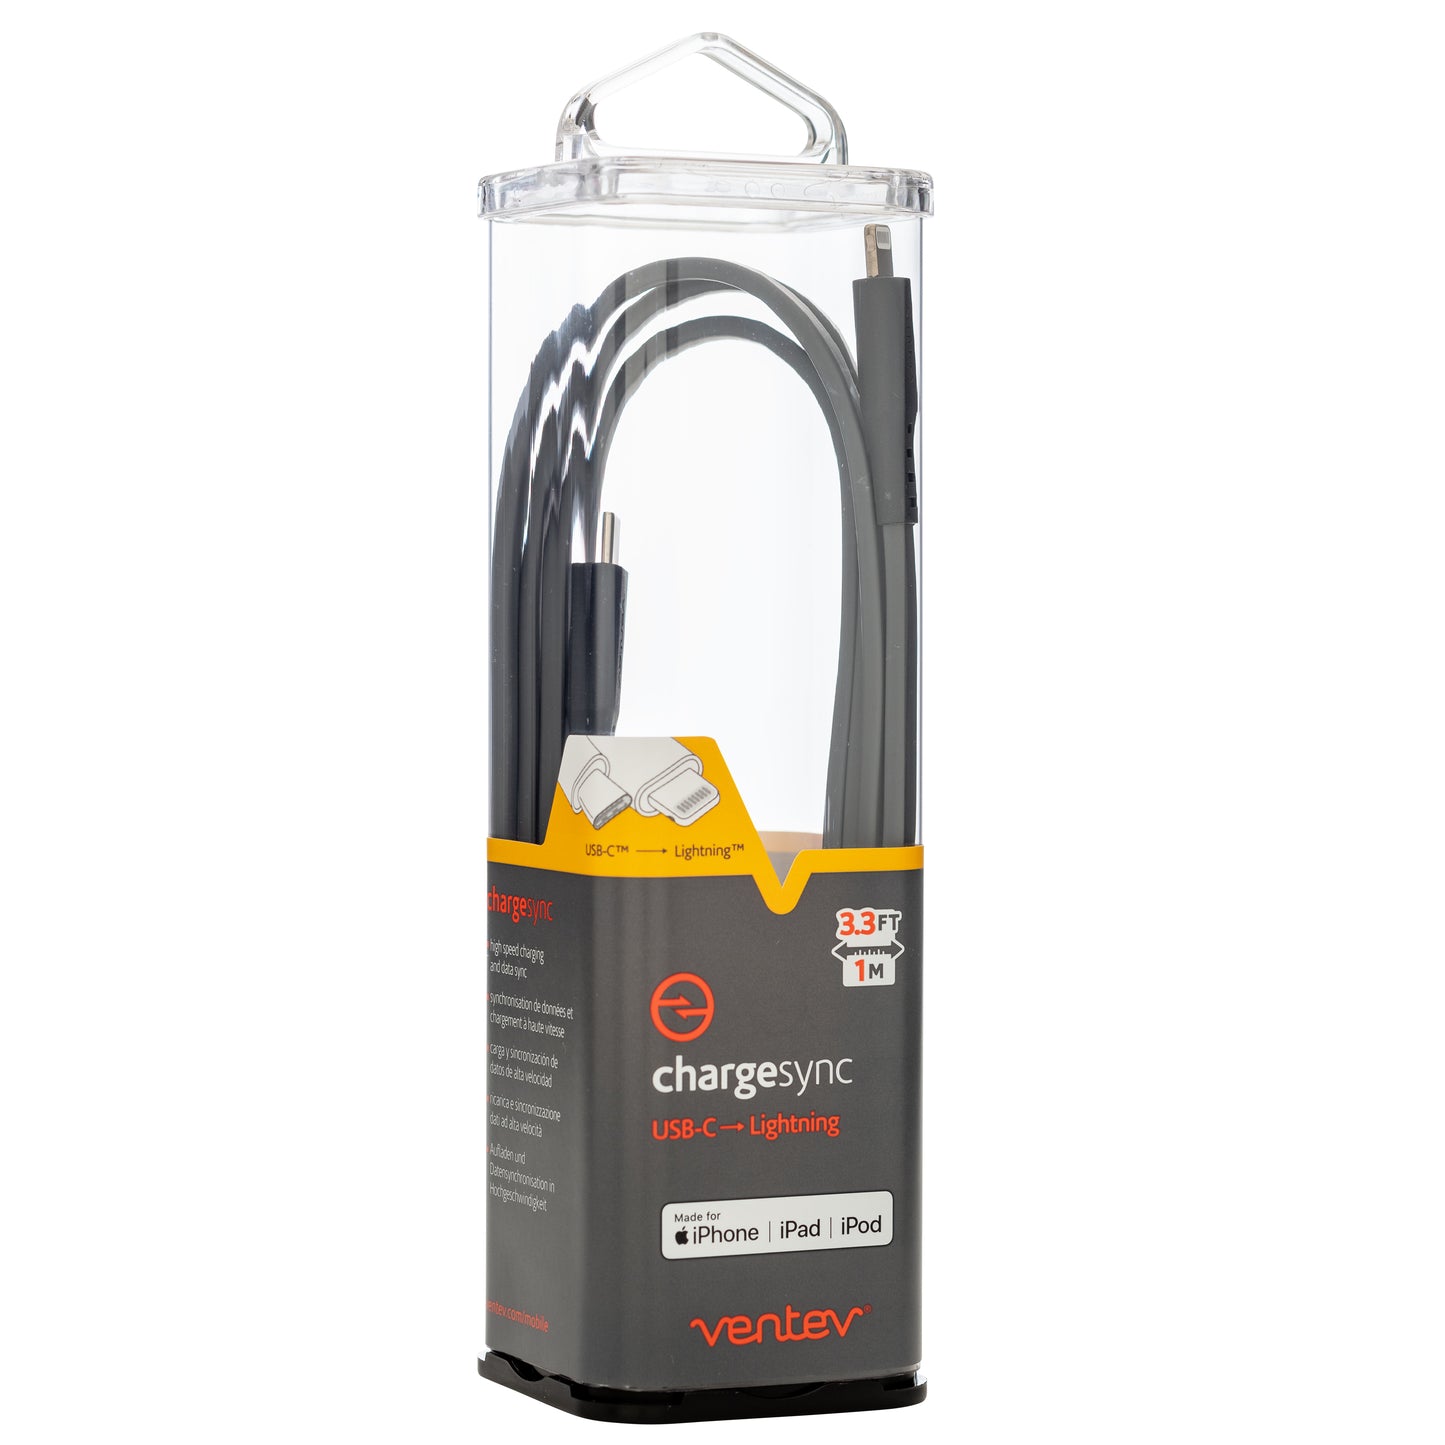 Ventev ChargeSync USB-C - Lightning Flat Cable 3.3ft (Grey)